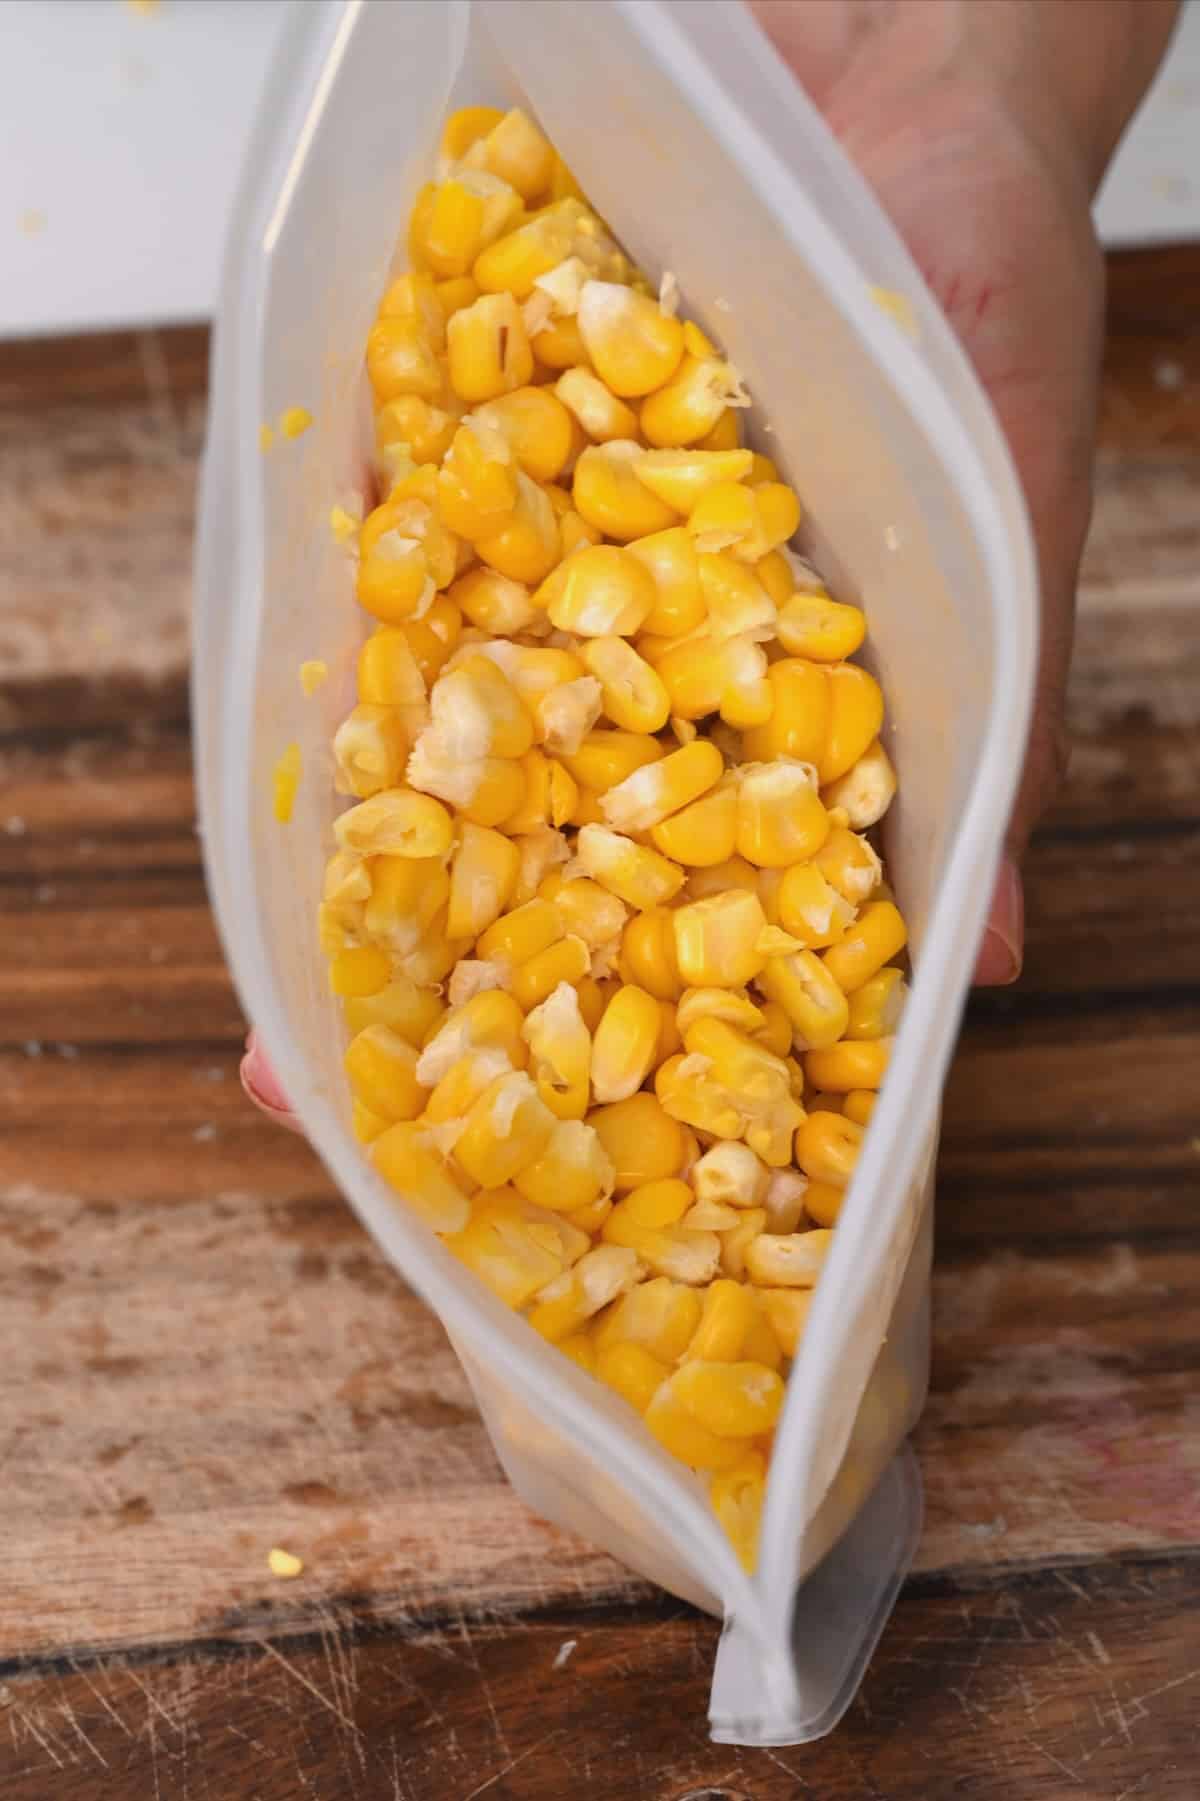 Corn kernels in a freezer bag